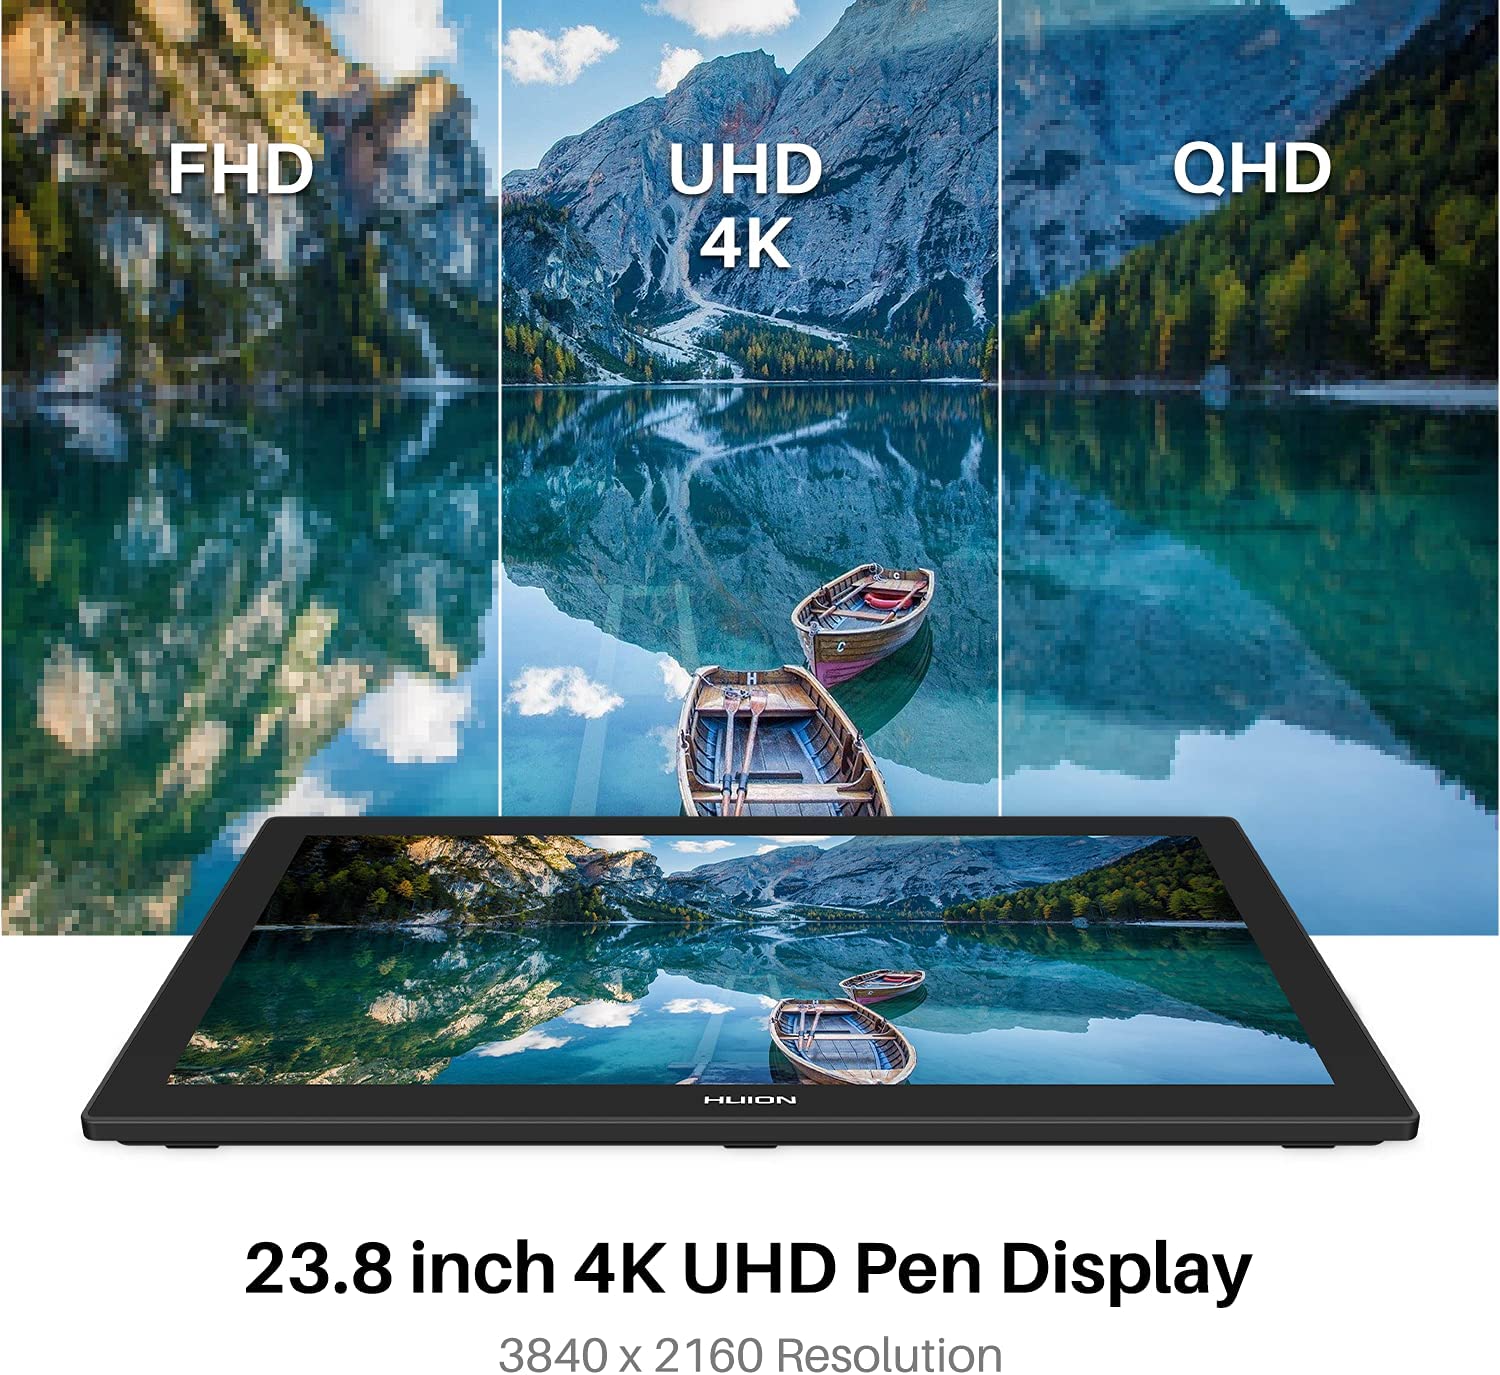 HUION Kamvas Pro 24 4K UHD Graphics Drawing Tablet features